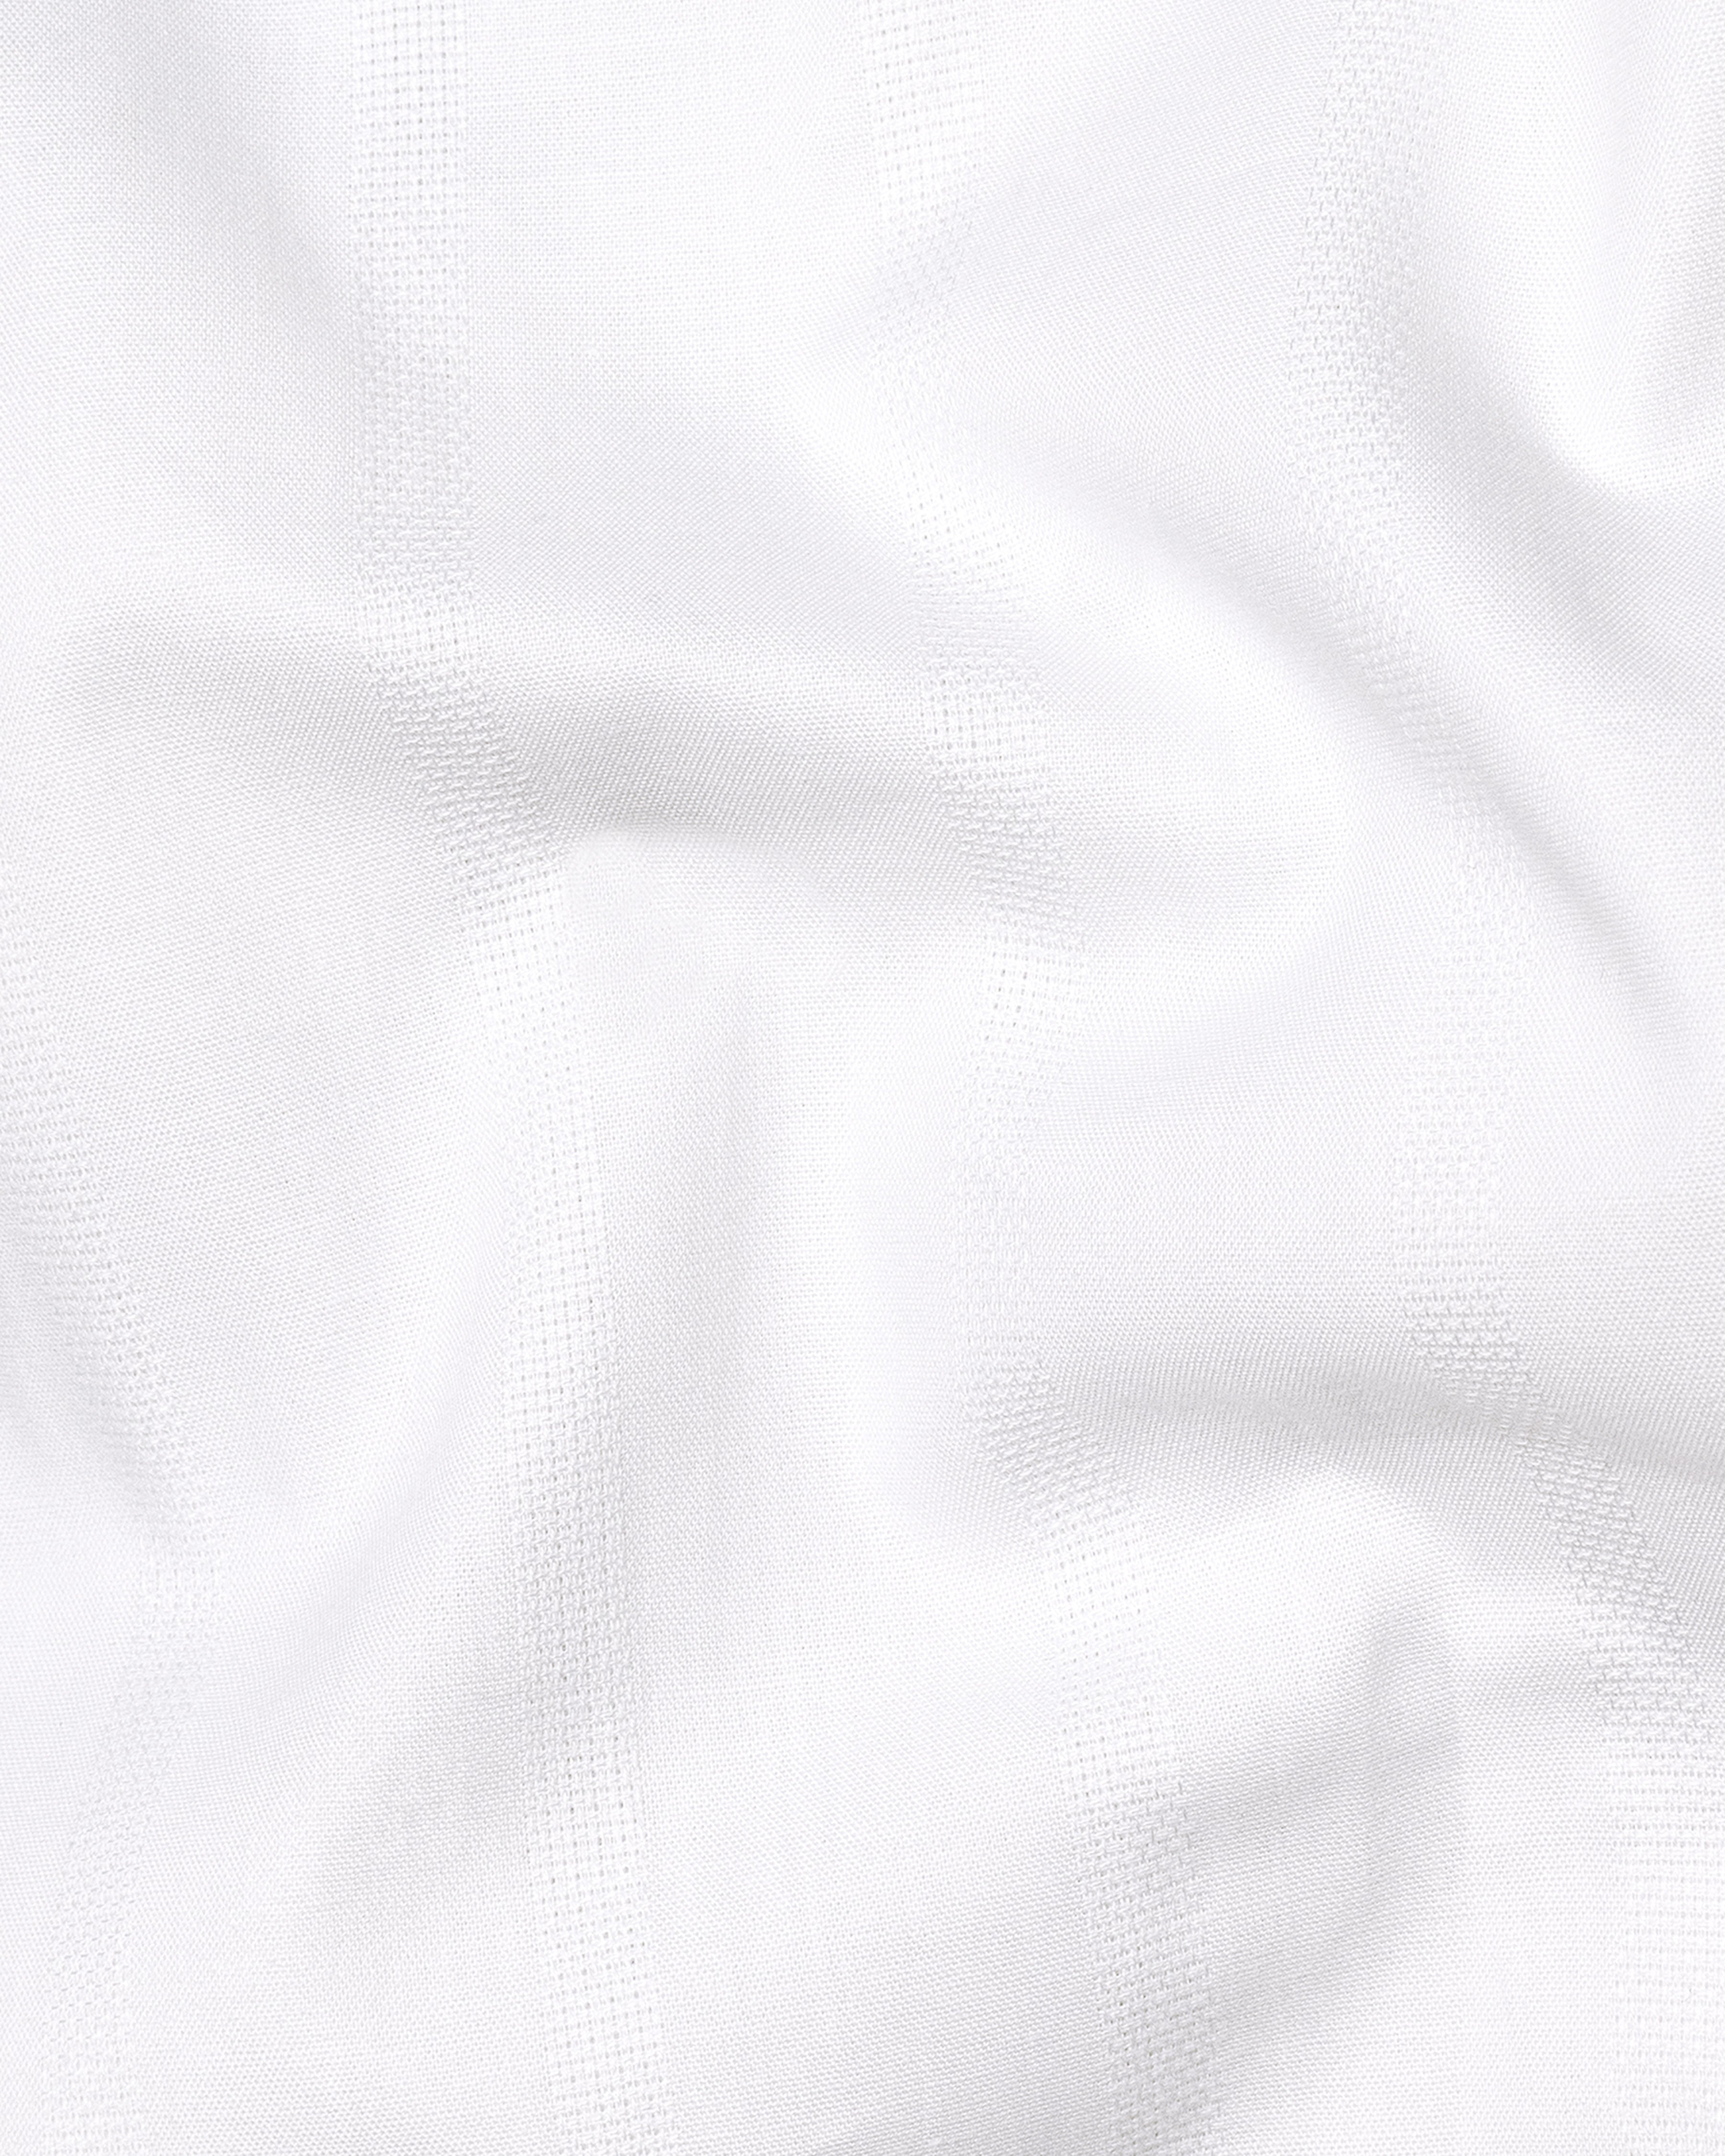 Bright White Dobby Textured Premium Giza Cotton Shirt 9578-38, 9578-H-38, 9578-39, 9578-H-39, 9578-40, 9578-H-40, 9578-42, 9578-H-42, 9578-44, 9578-H-44, 9578-46, 9578-H-46, 9578-48, 9578-H-48, 9578-50, 9578-H-50, 9578-52, 9578-H-52